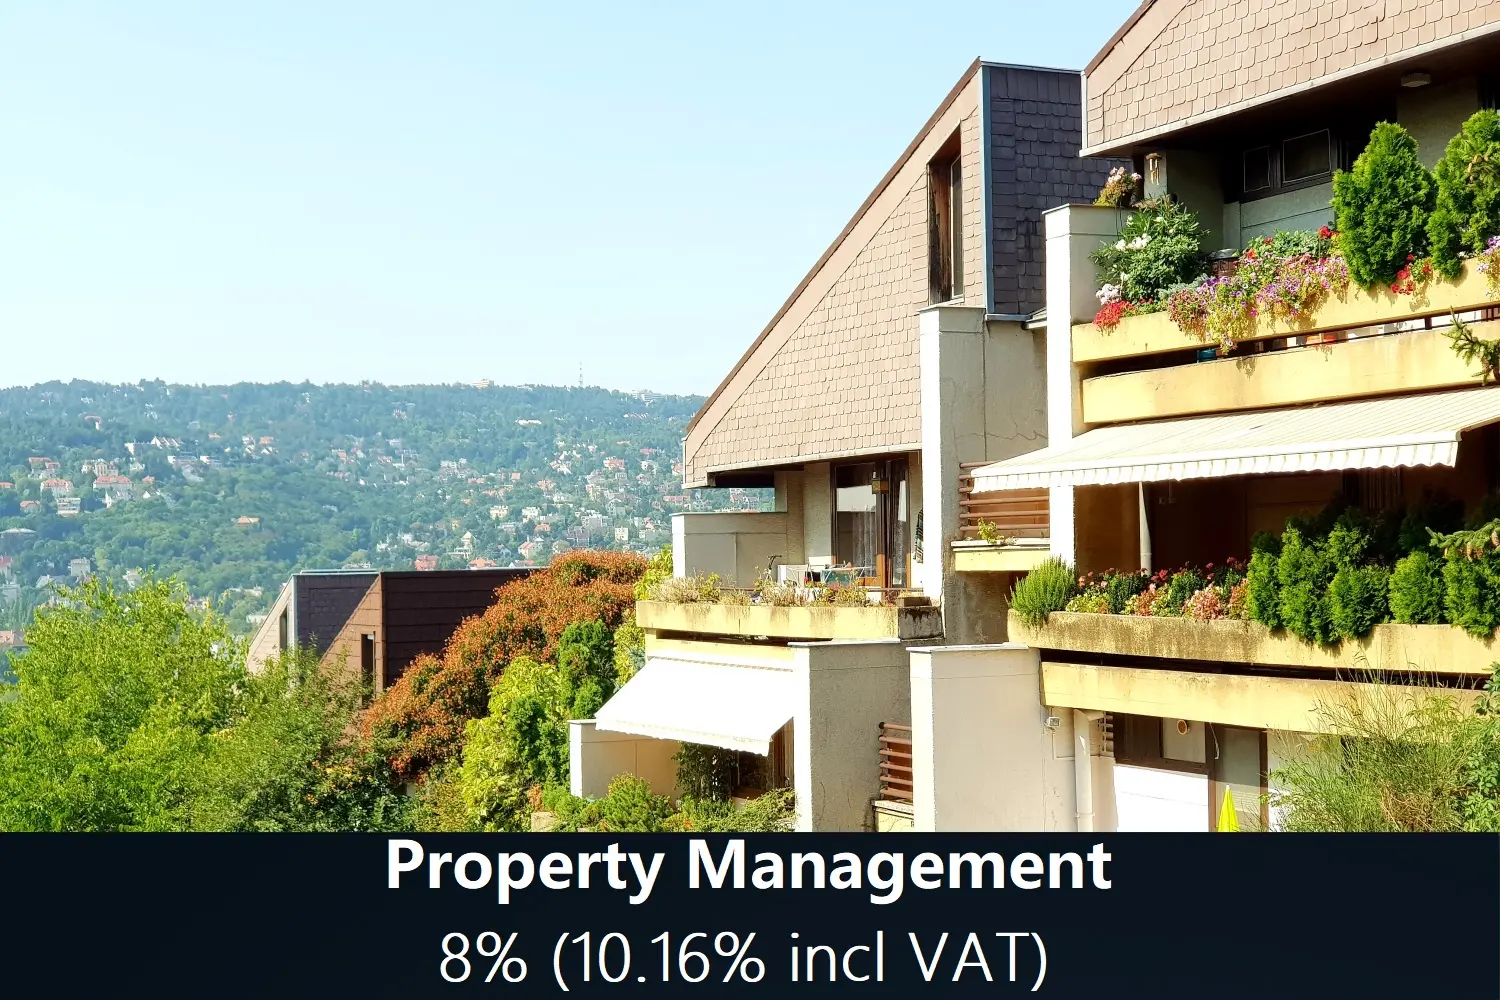 Property Management fee - 8% (10% incl VAT)